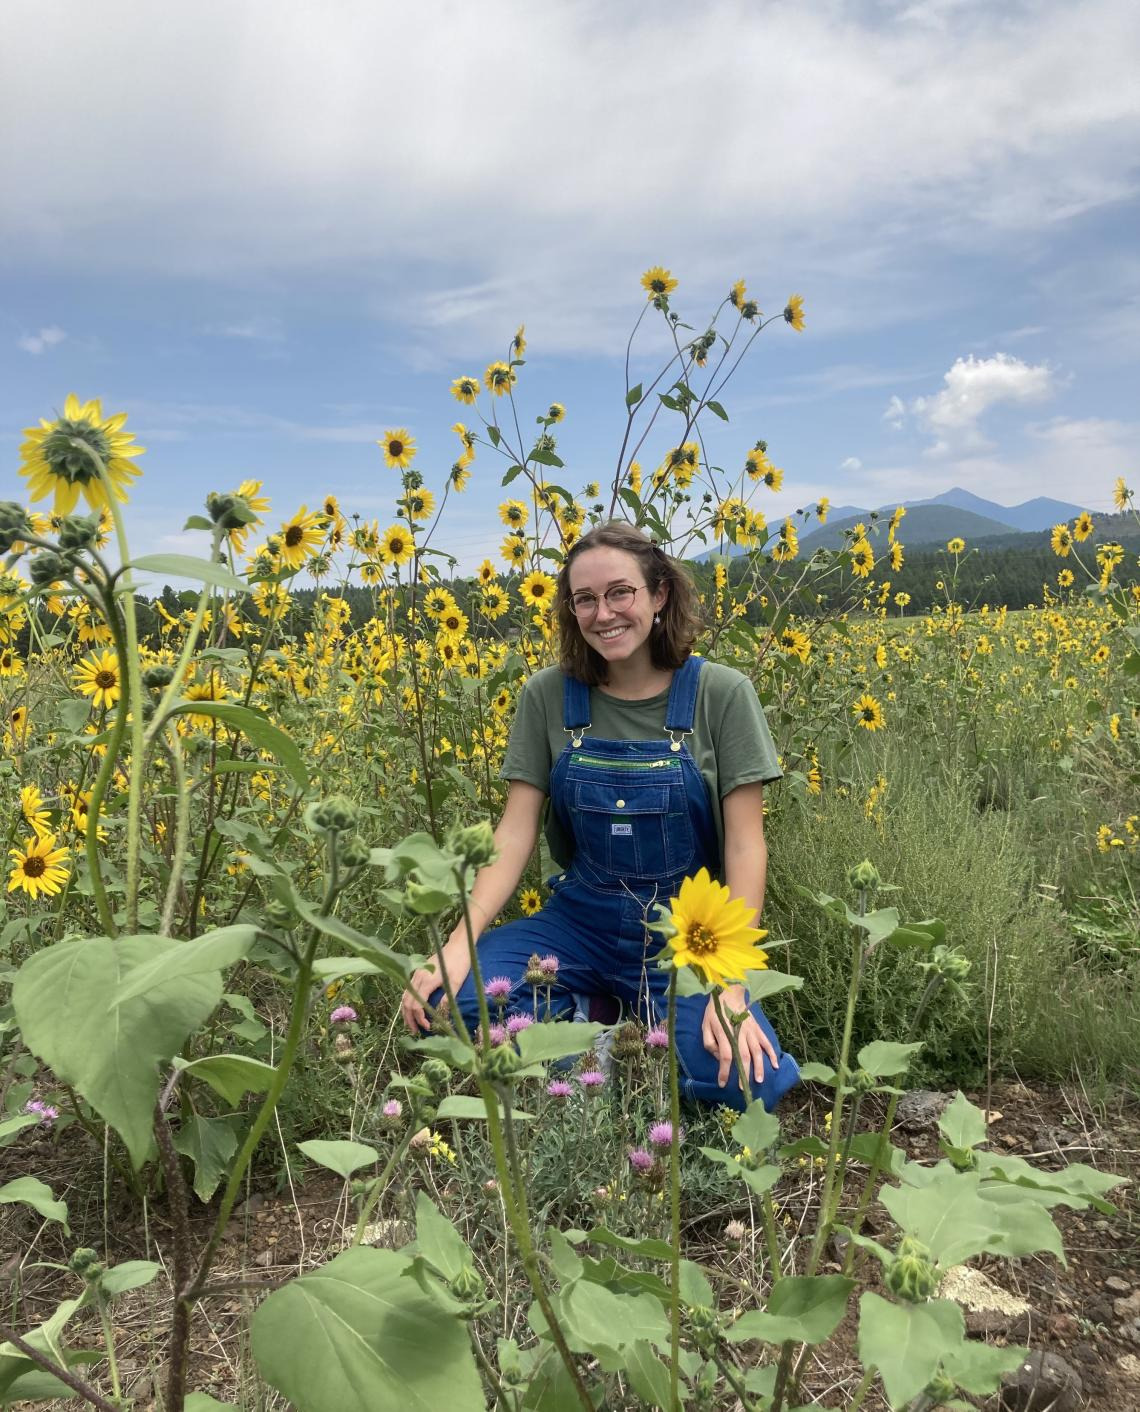 Chloe Penna outside among a field of sunflowers